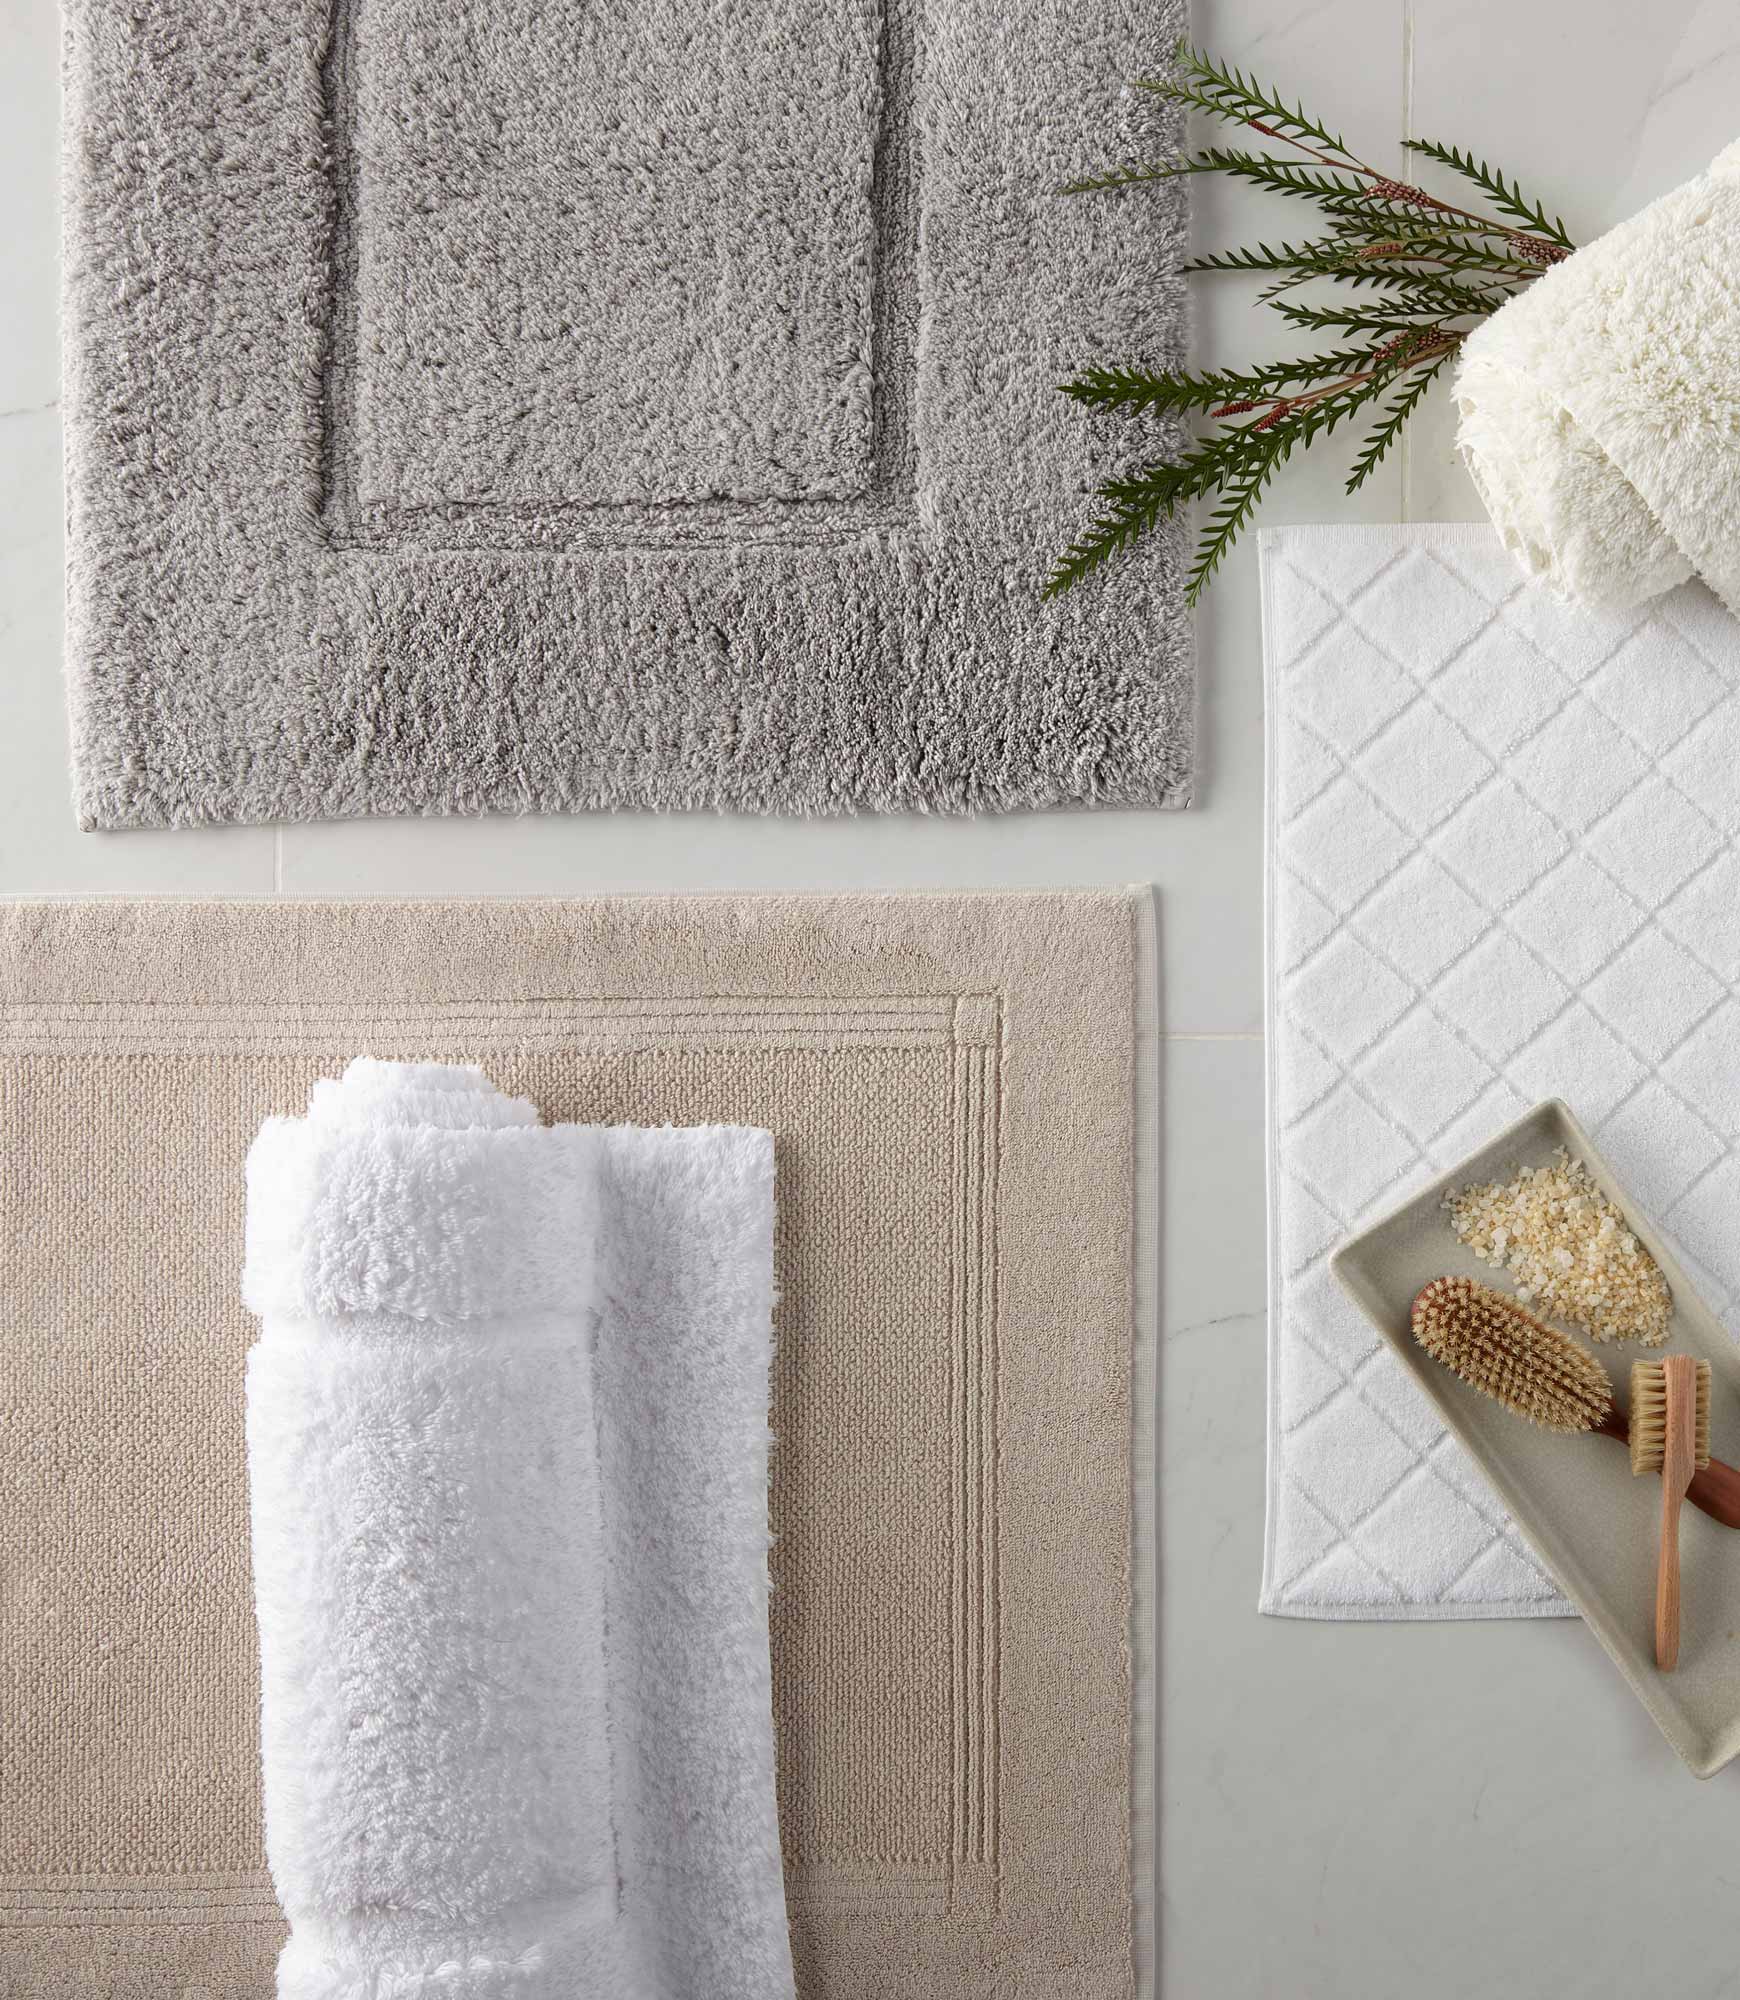 DIY Bath Mat out of Old Towels // Towel bath mat Tutorial 